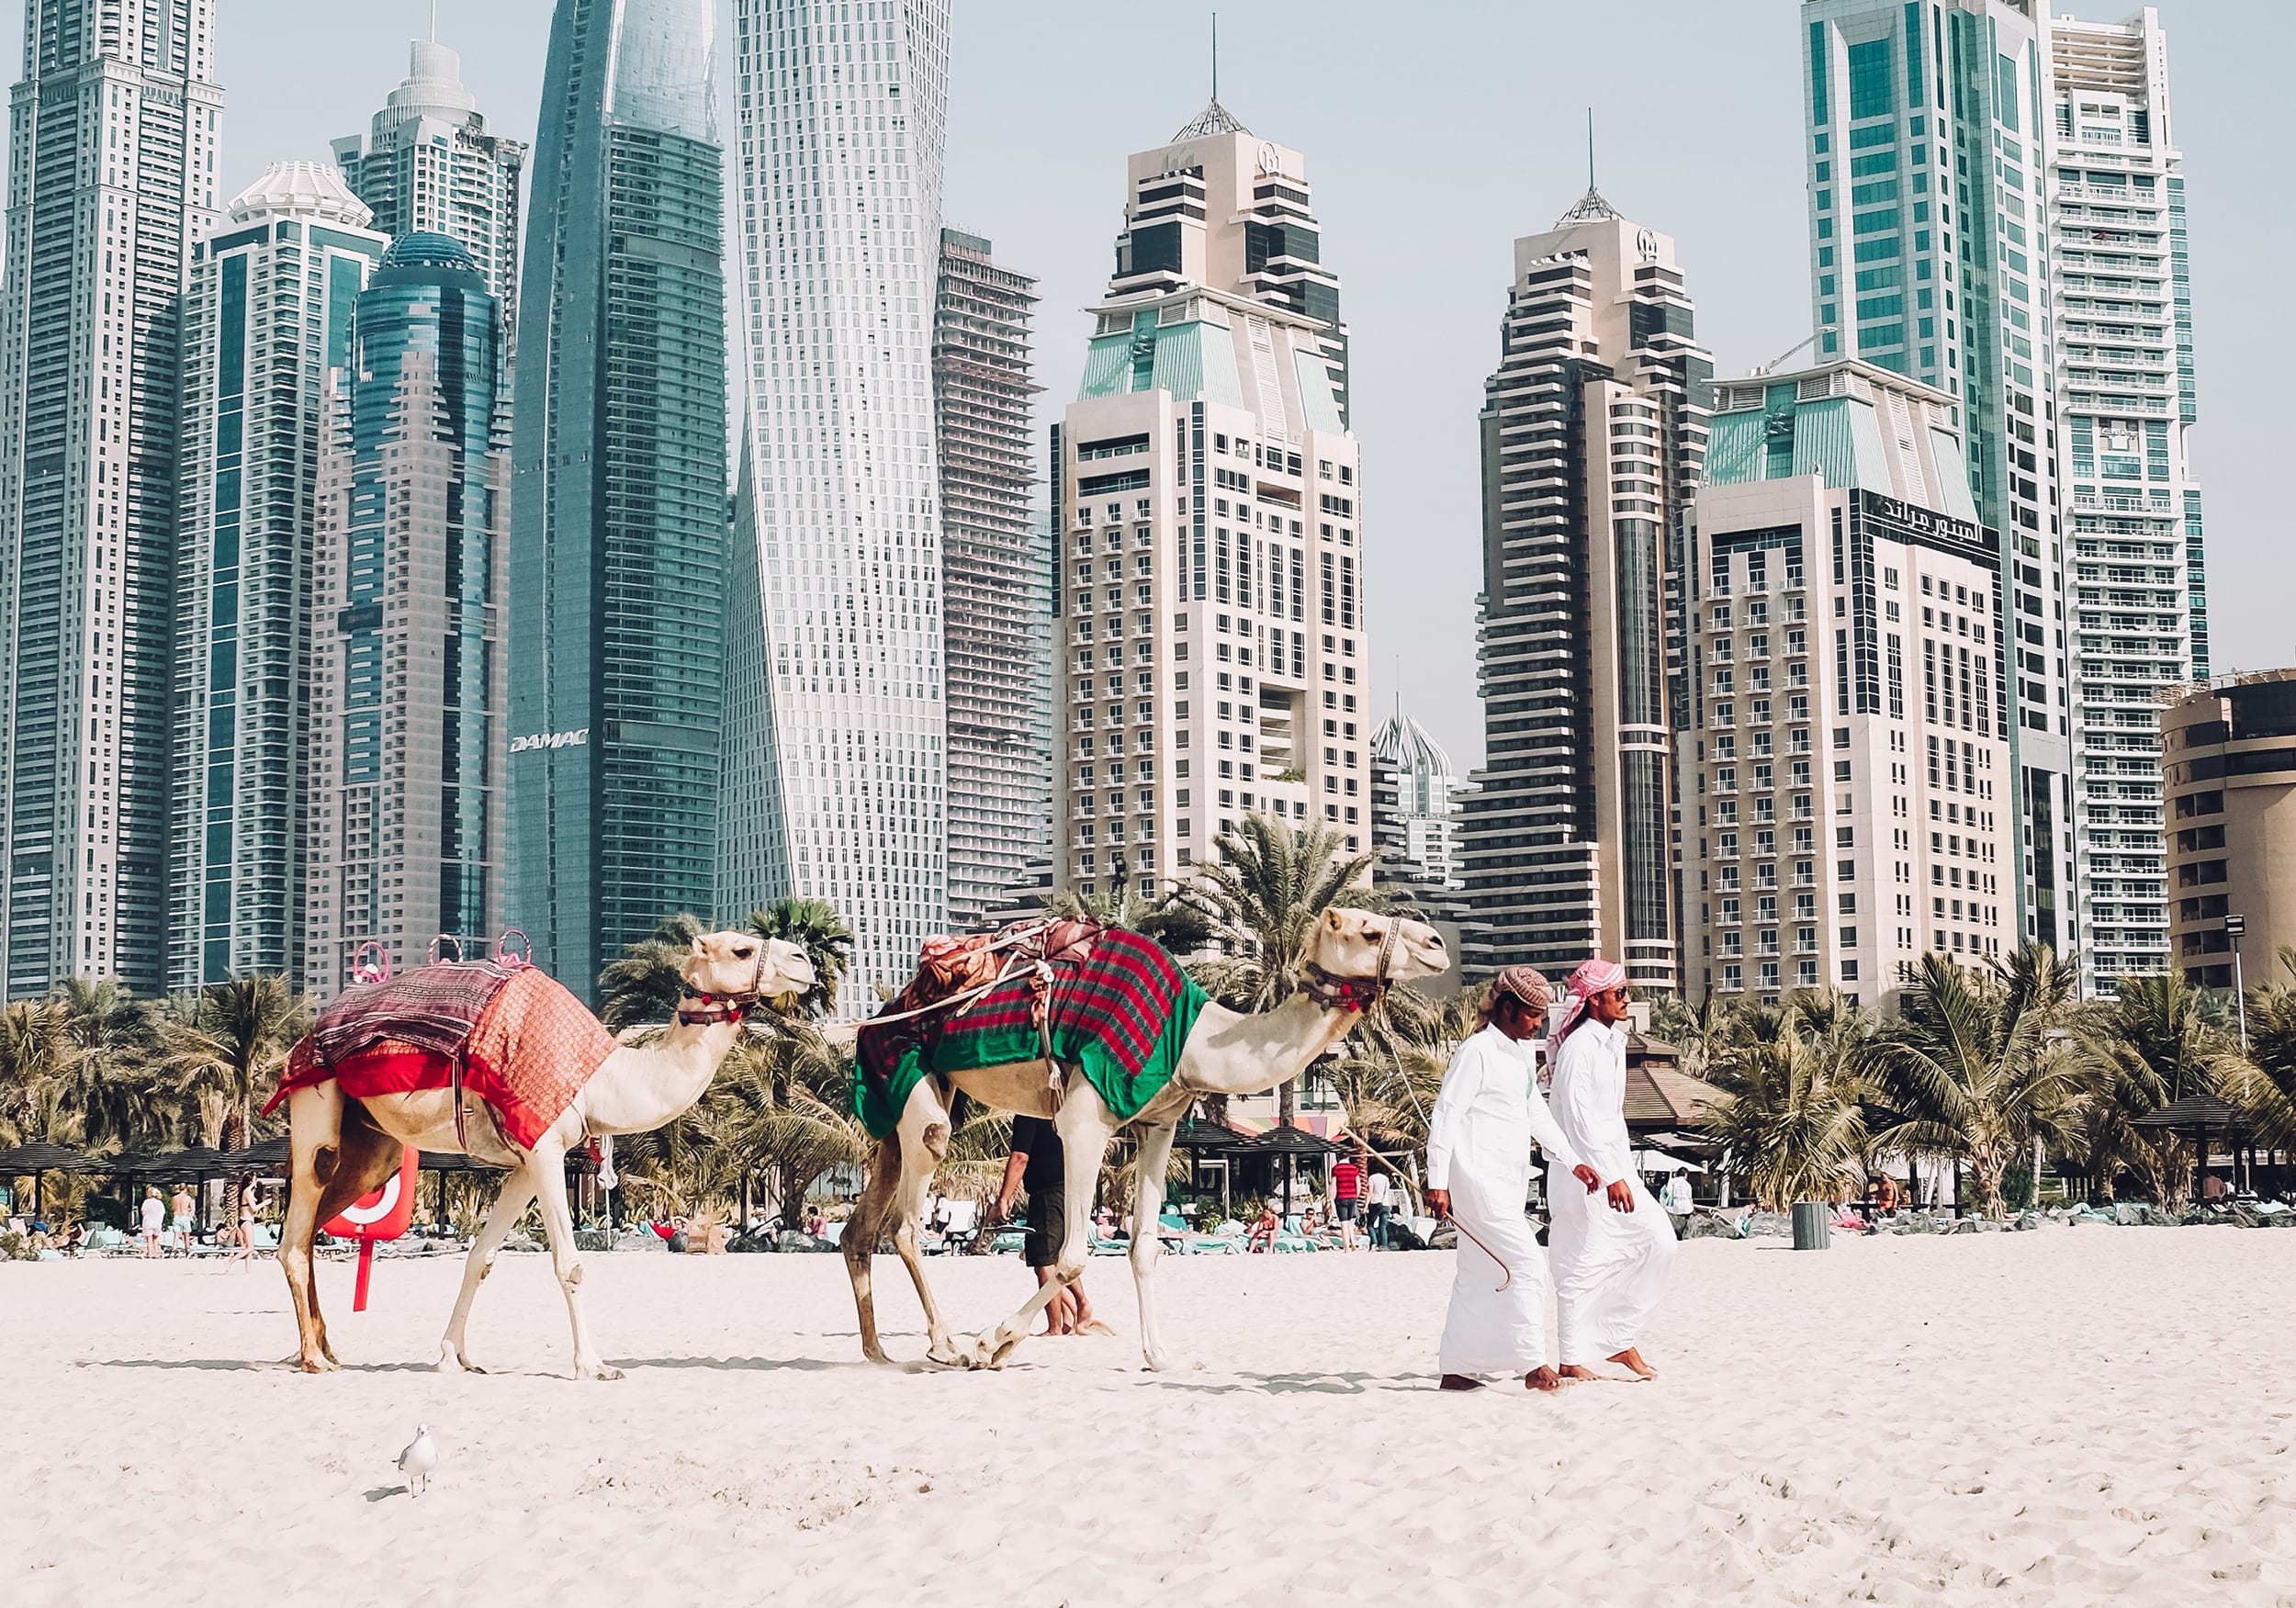 Two men walking camels down the beach in Dubai.